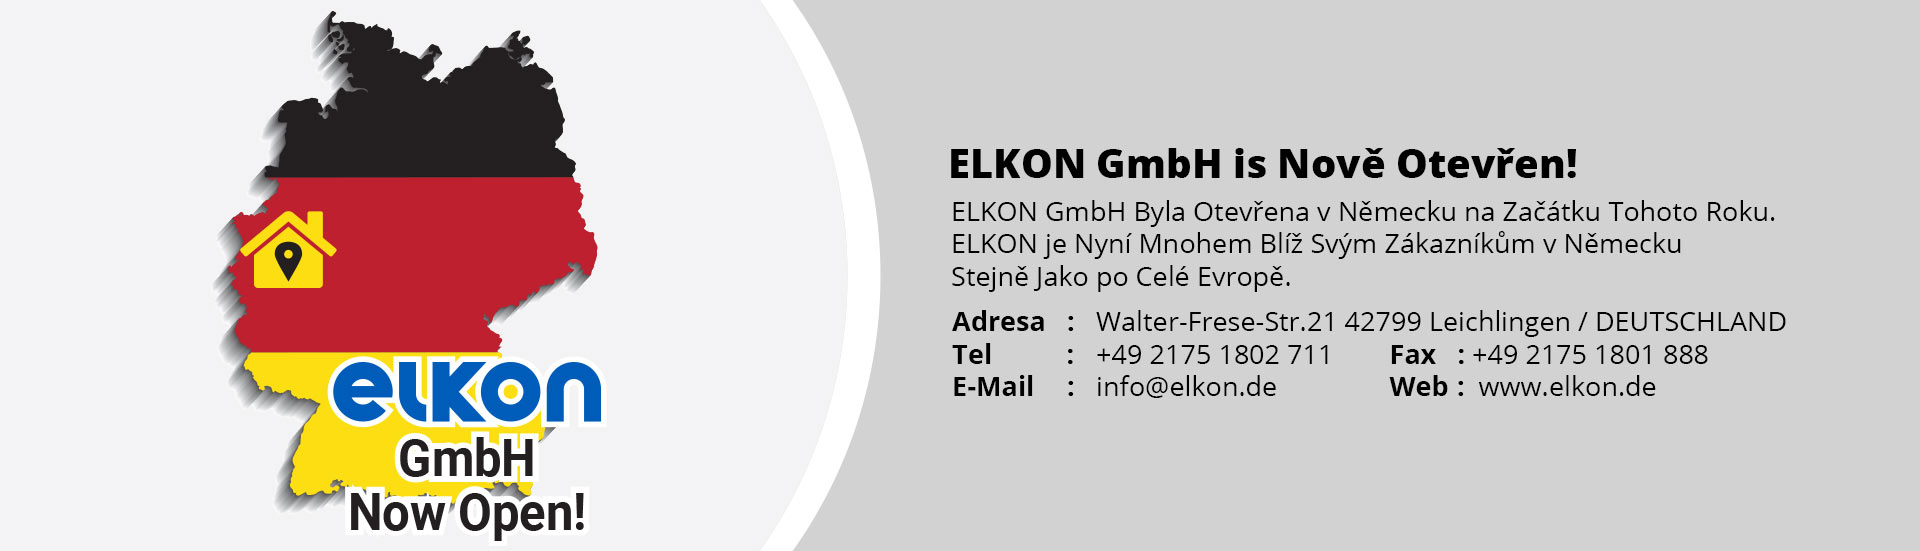 2-Elkon-Gmbh_8